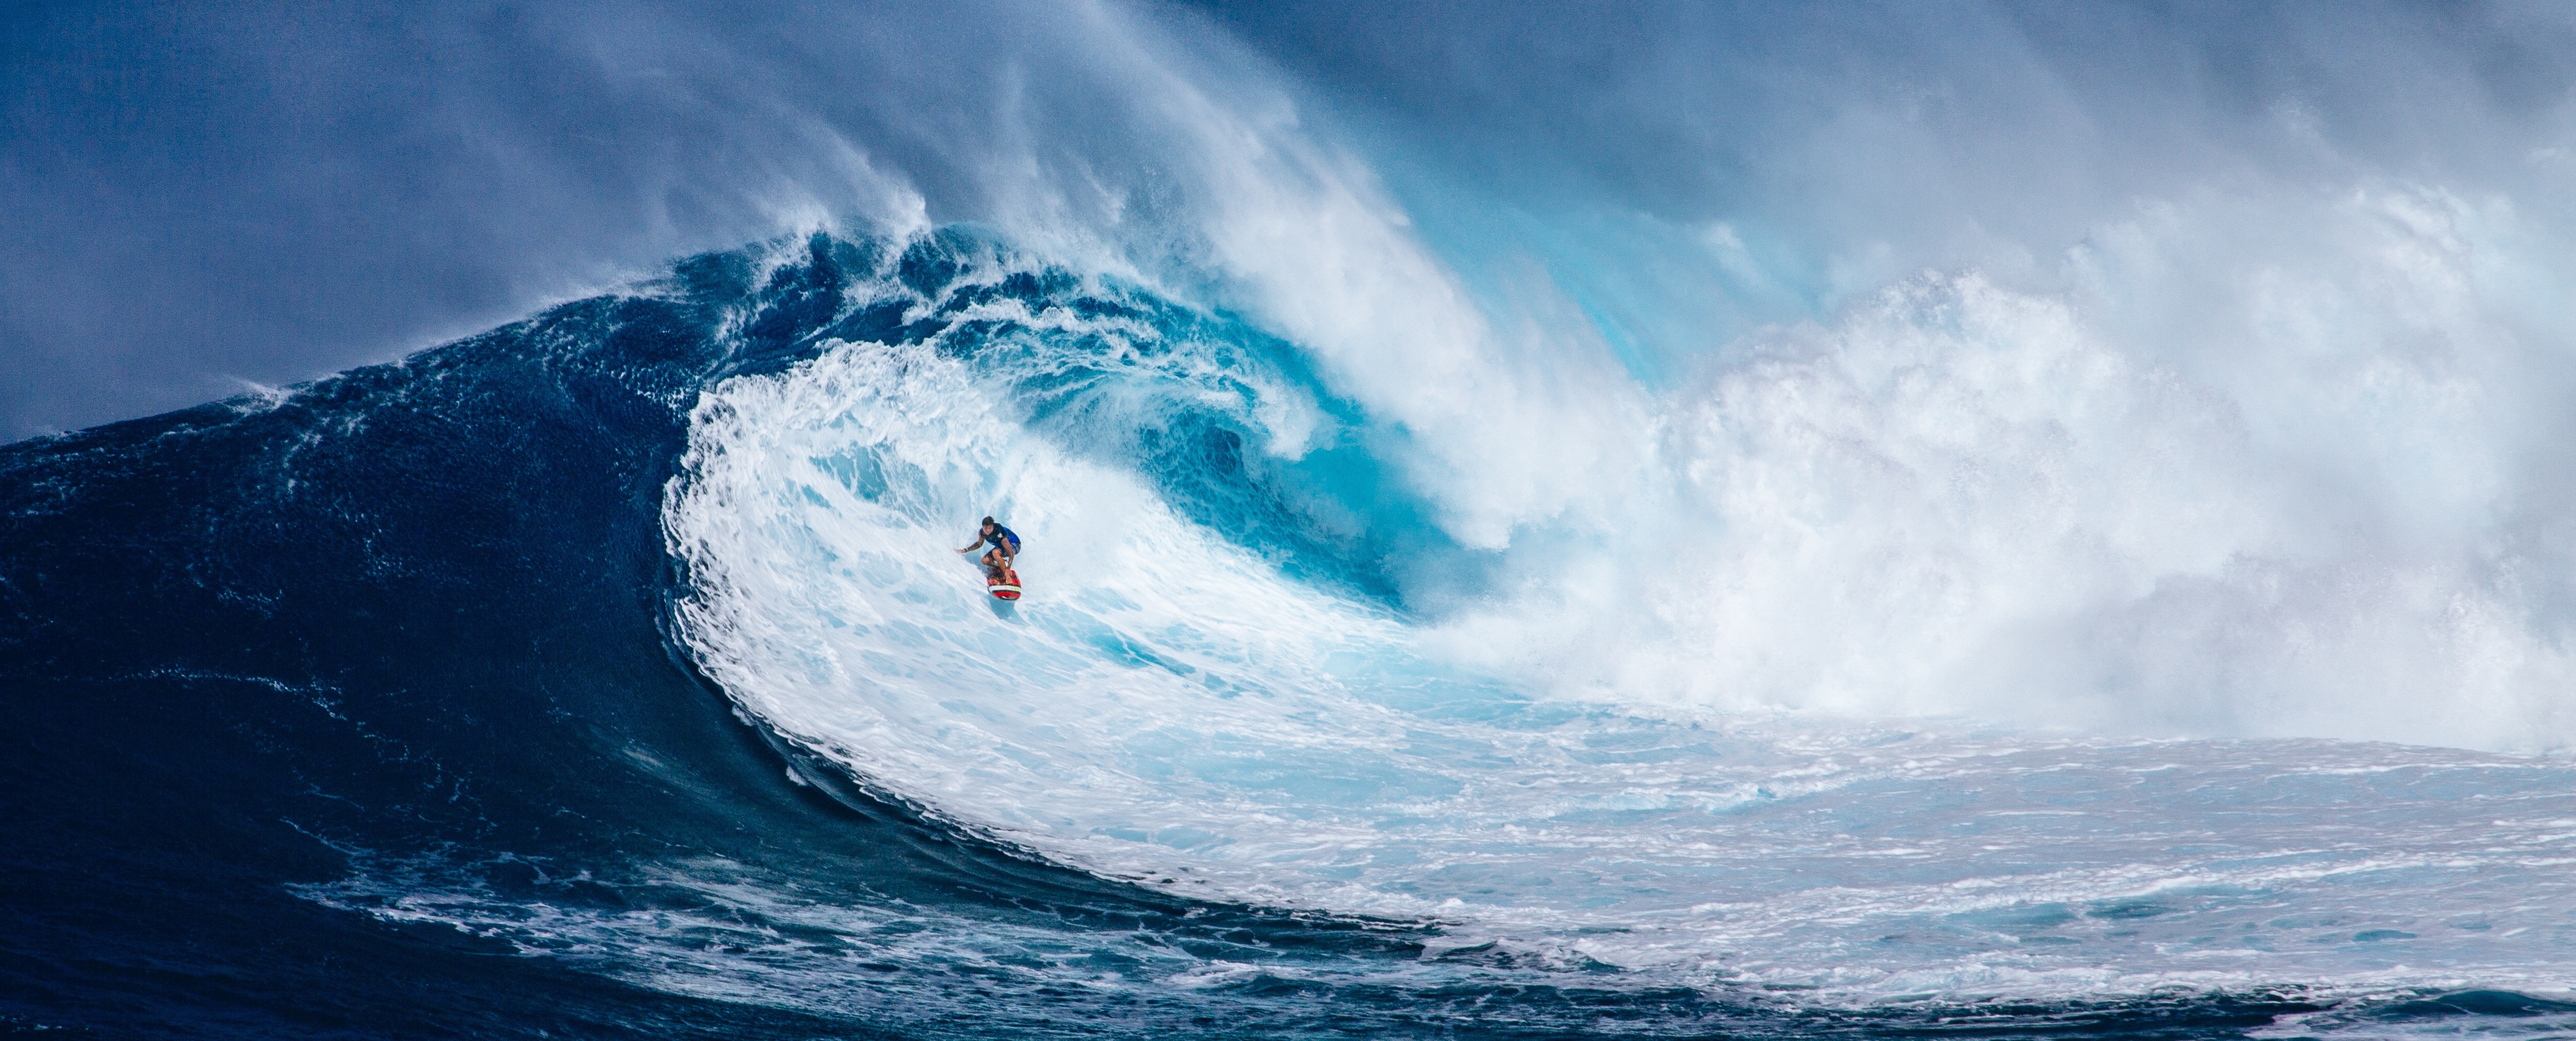 hawaii, sports, waves, serfing, surfer